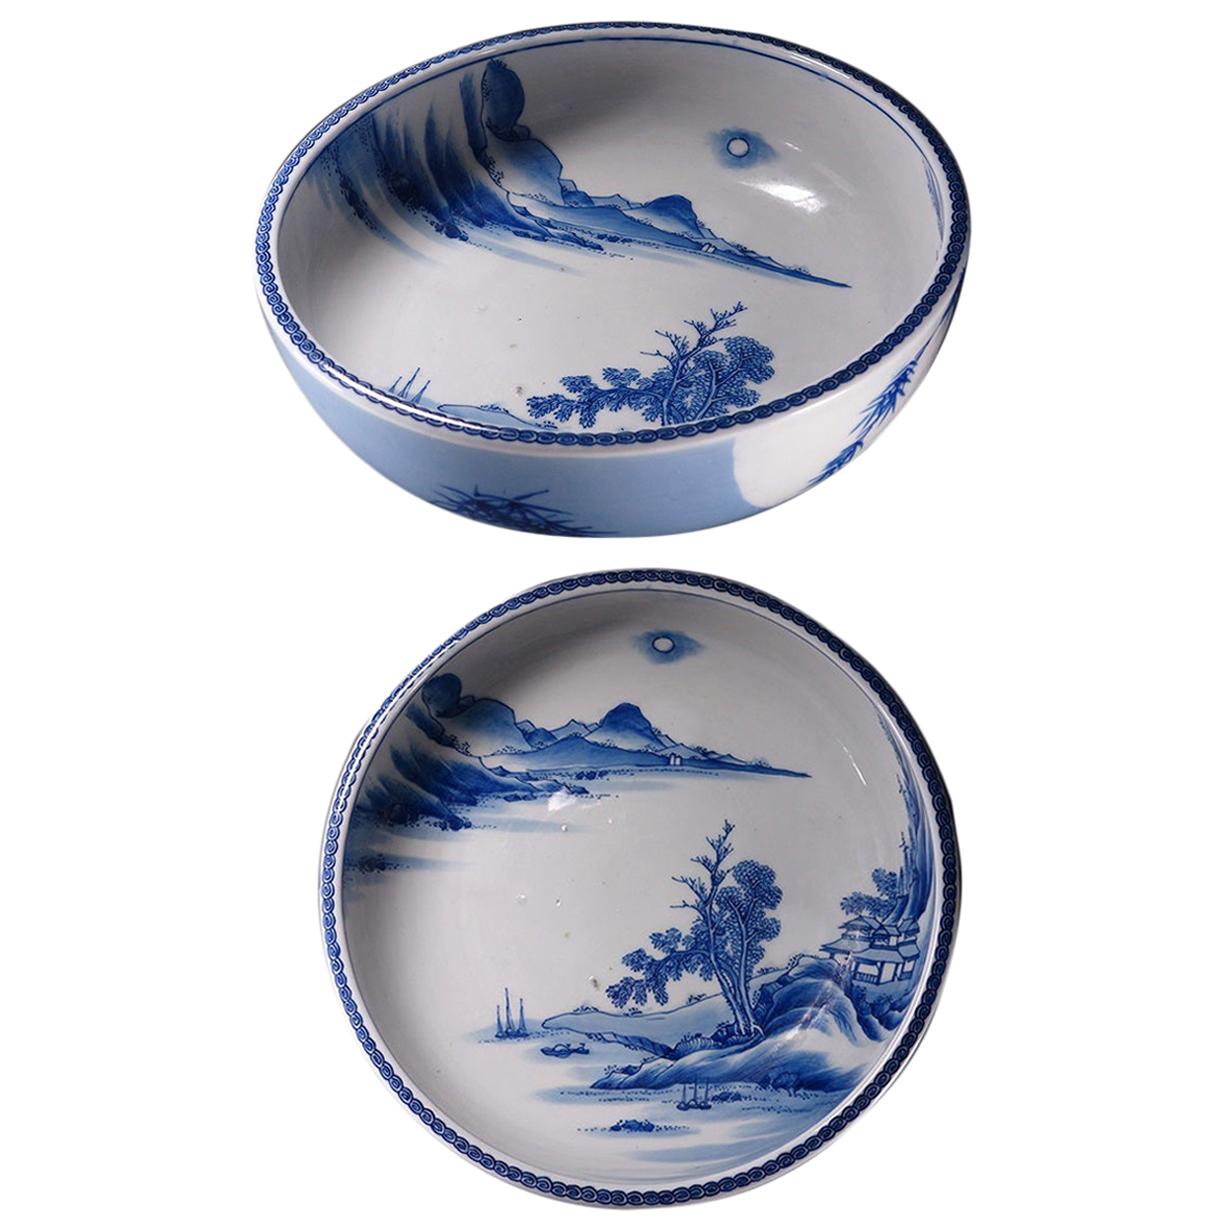 Large Arita Bowl Beautifull Japanese Porcelain 19th Century Edo/Meiji Period